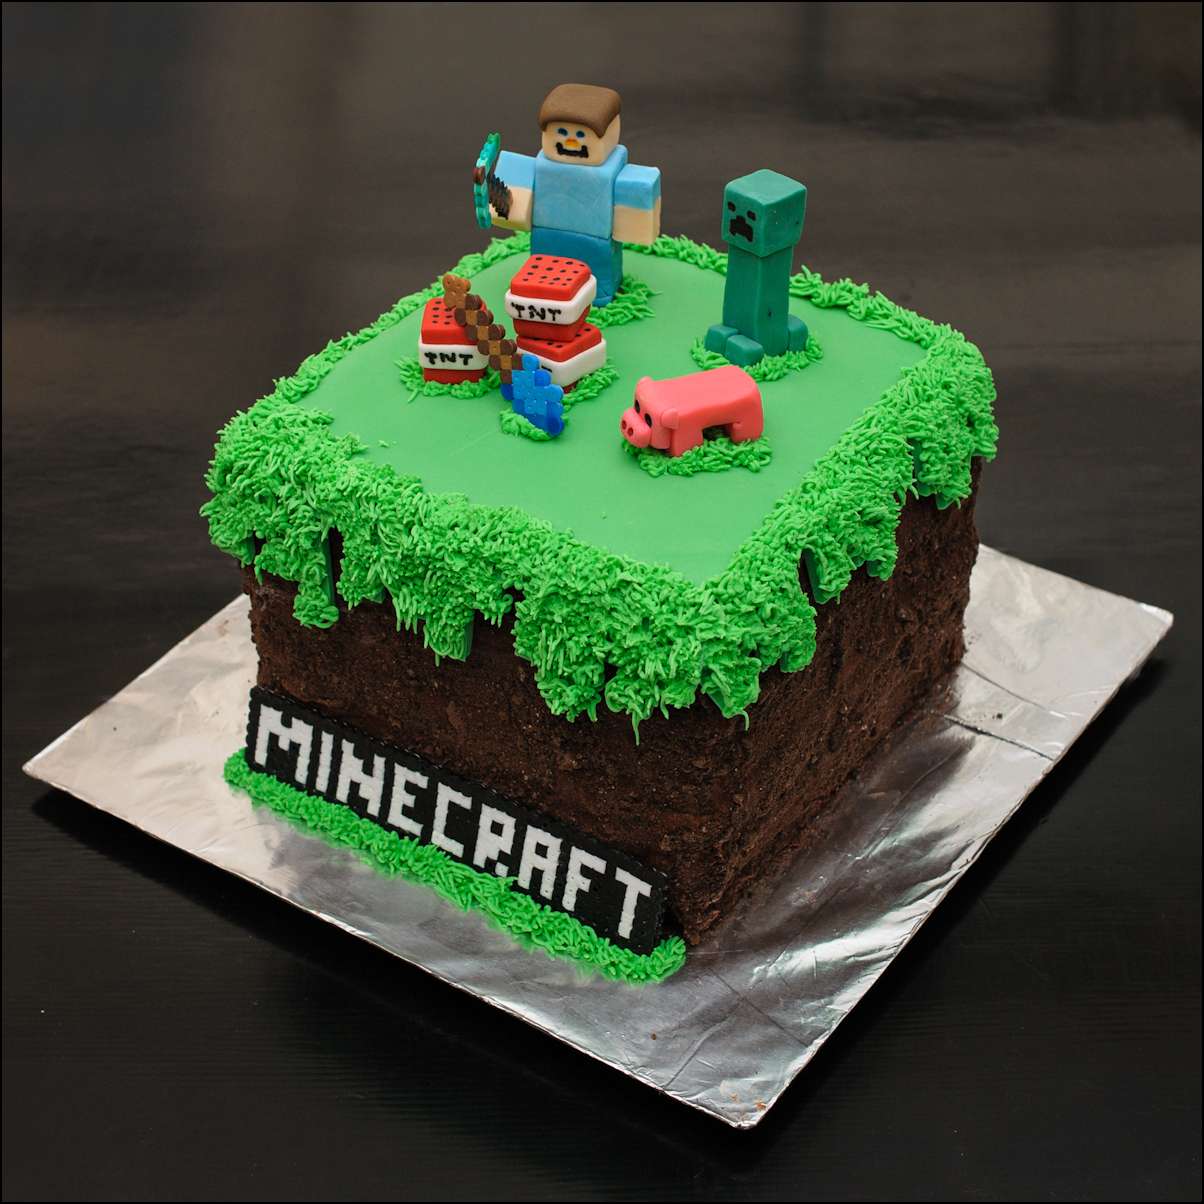 Lego Minecraft cake - Sherry's Cake Creations | Facebook